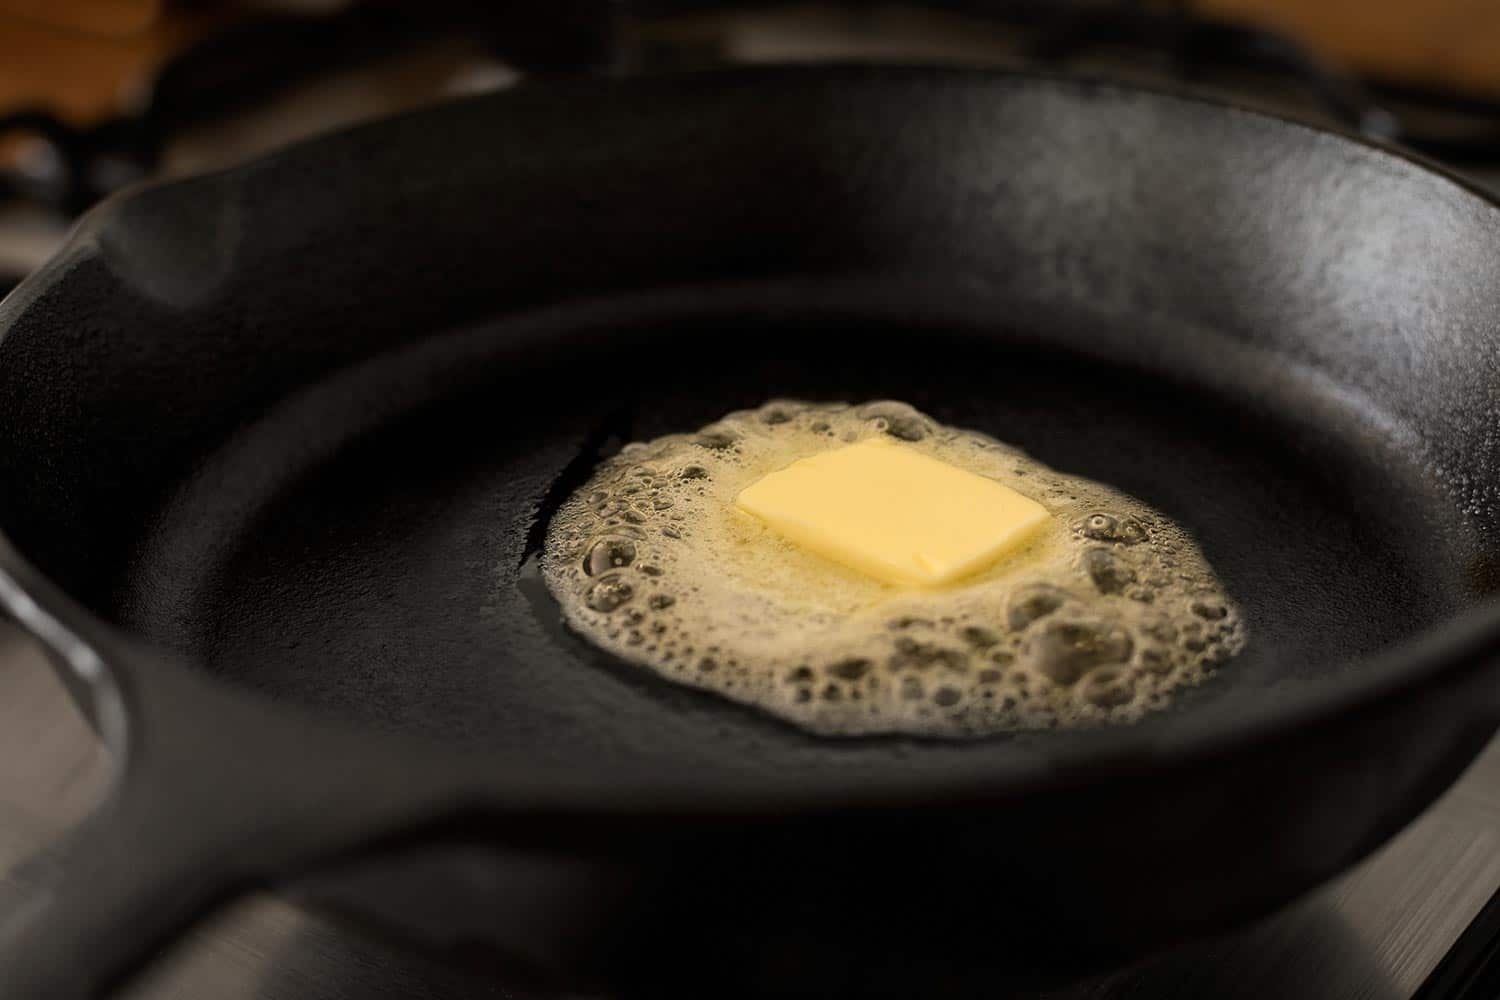 A butter pat melting on a black cast iron frying pan